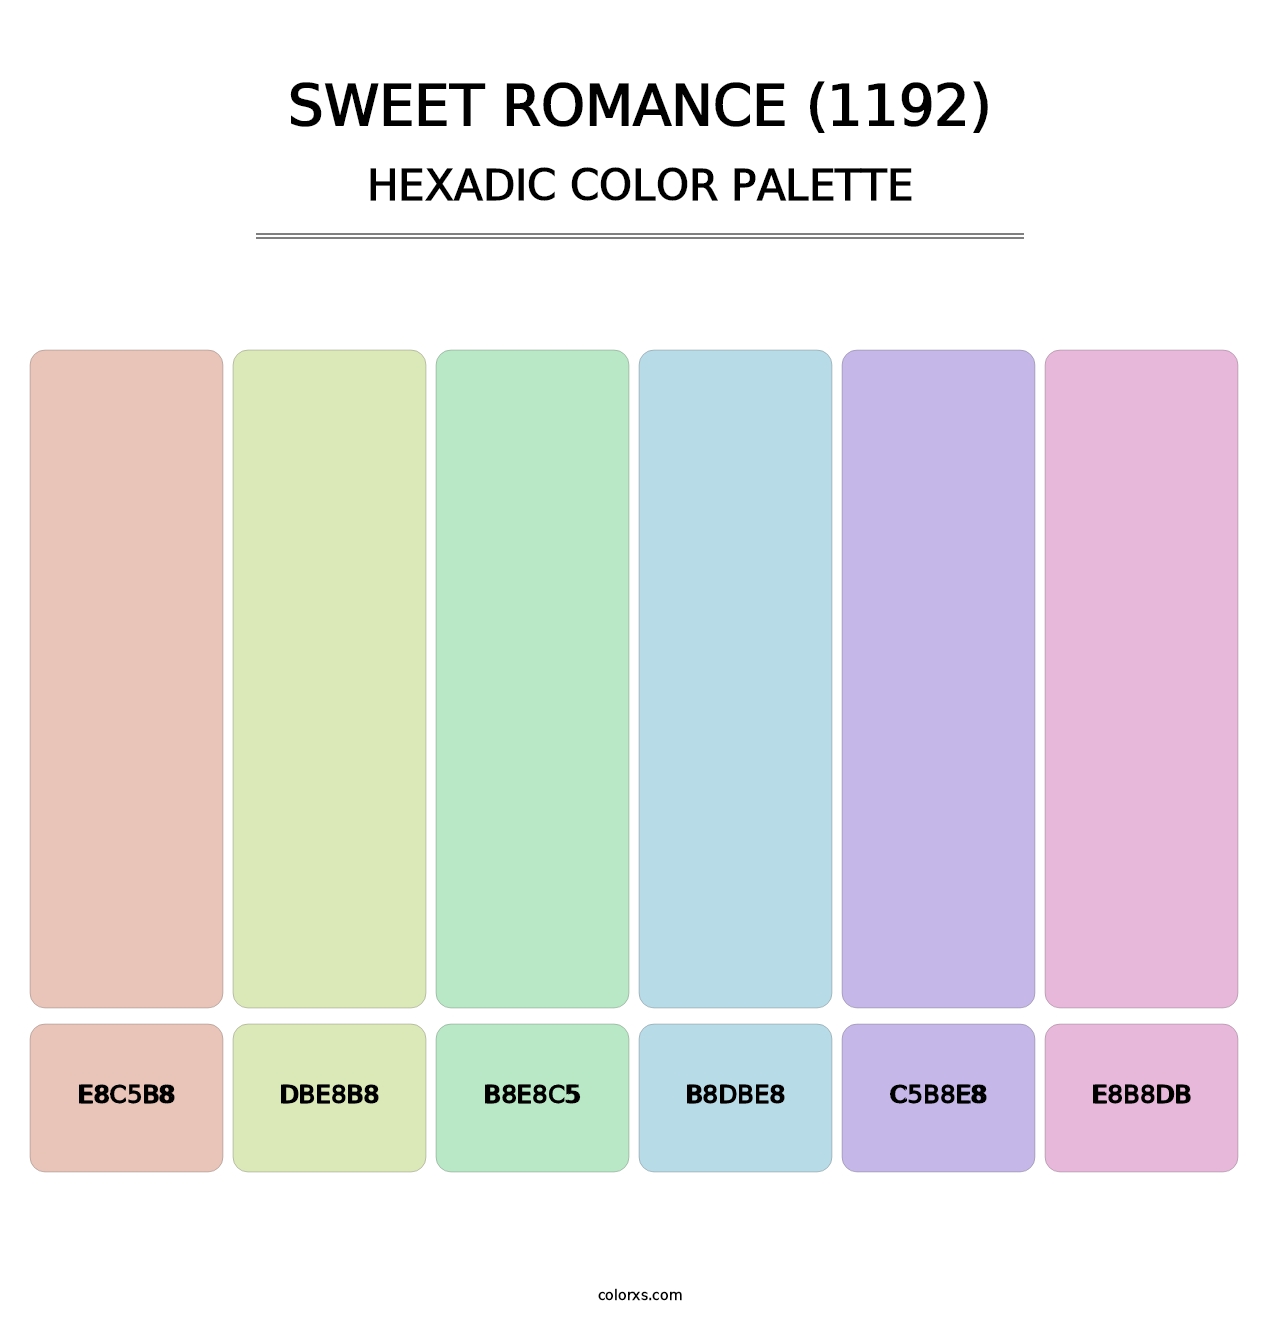 Sweet Romance (1192) - Hexadic Color Palette